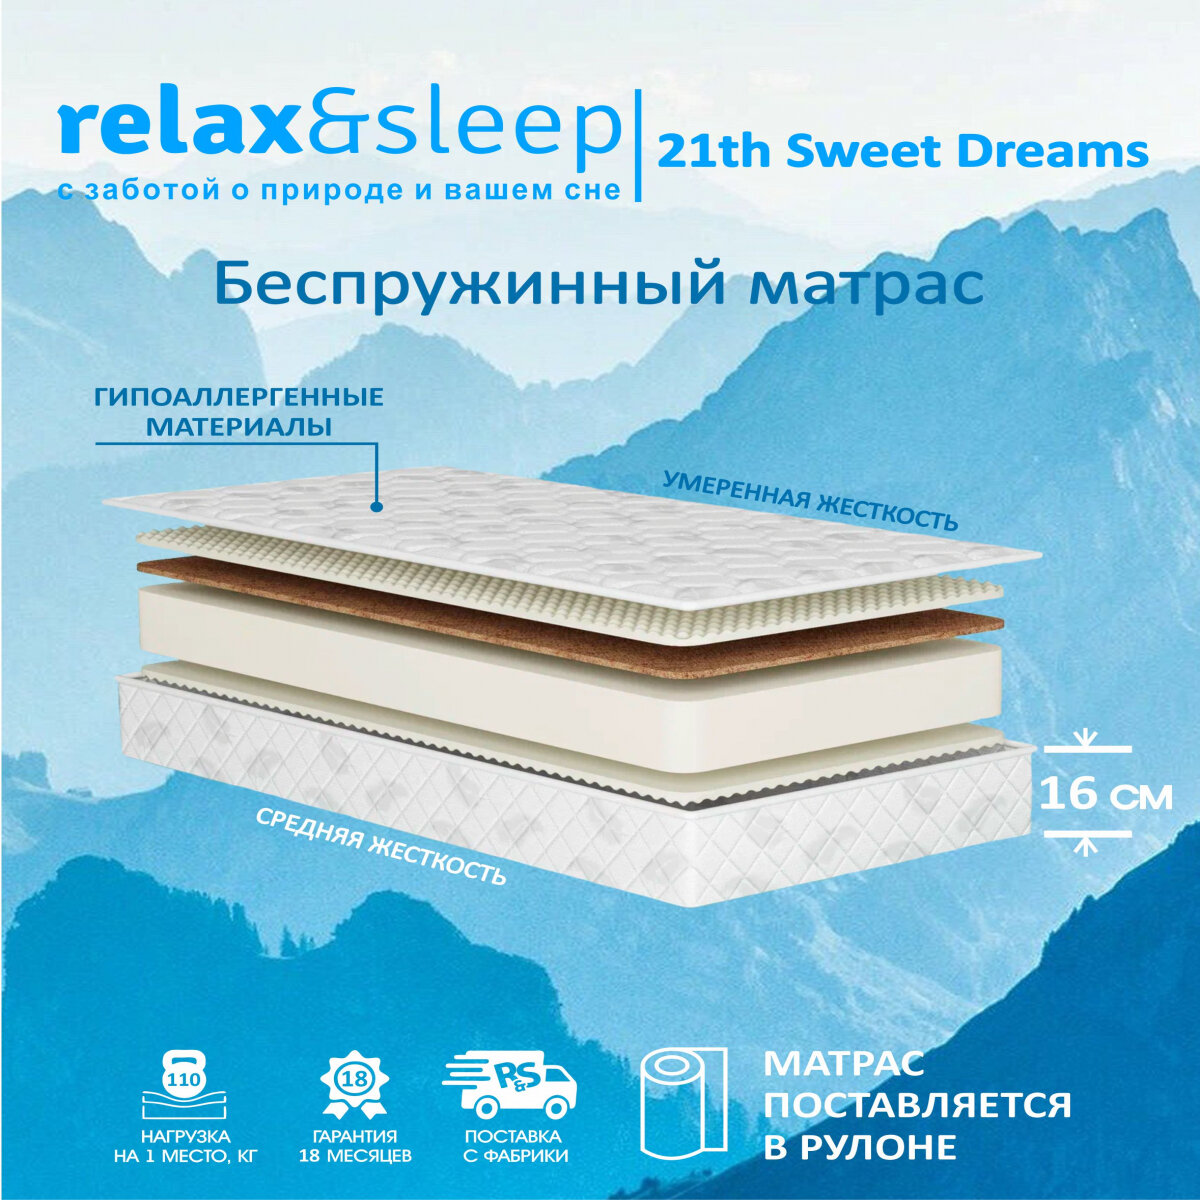 Матрас Relax&Sleep ортопедический беспружинный 21th Sweet Dreams (100 / 185)